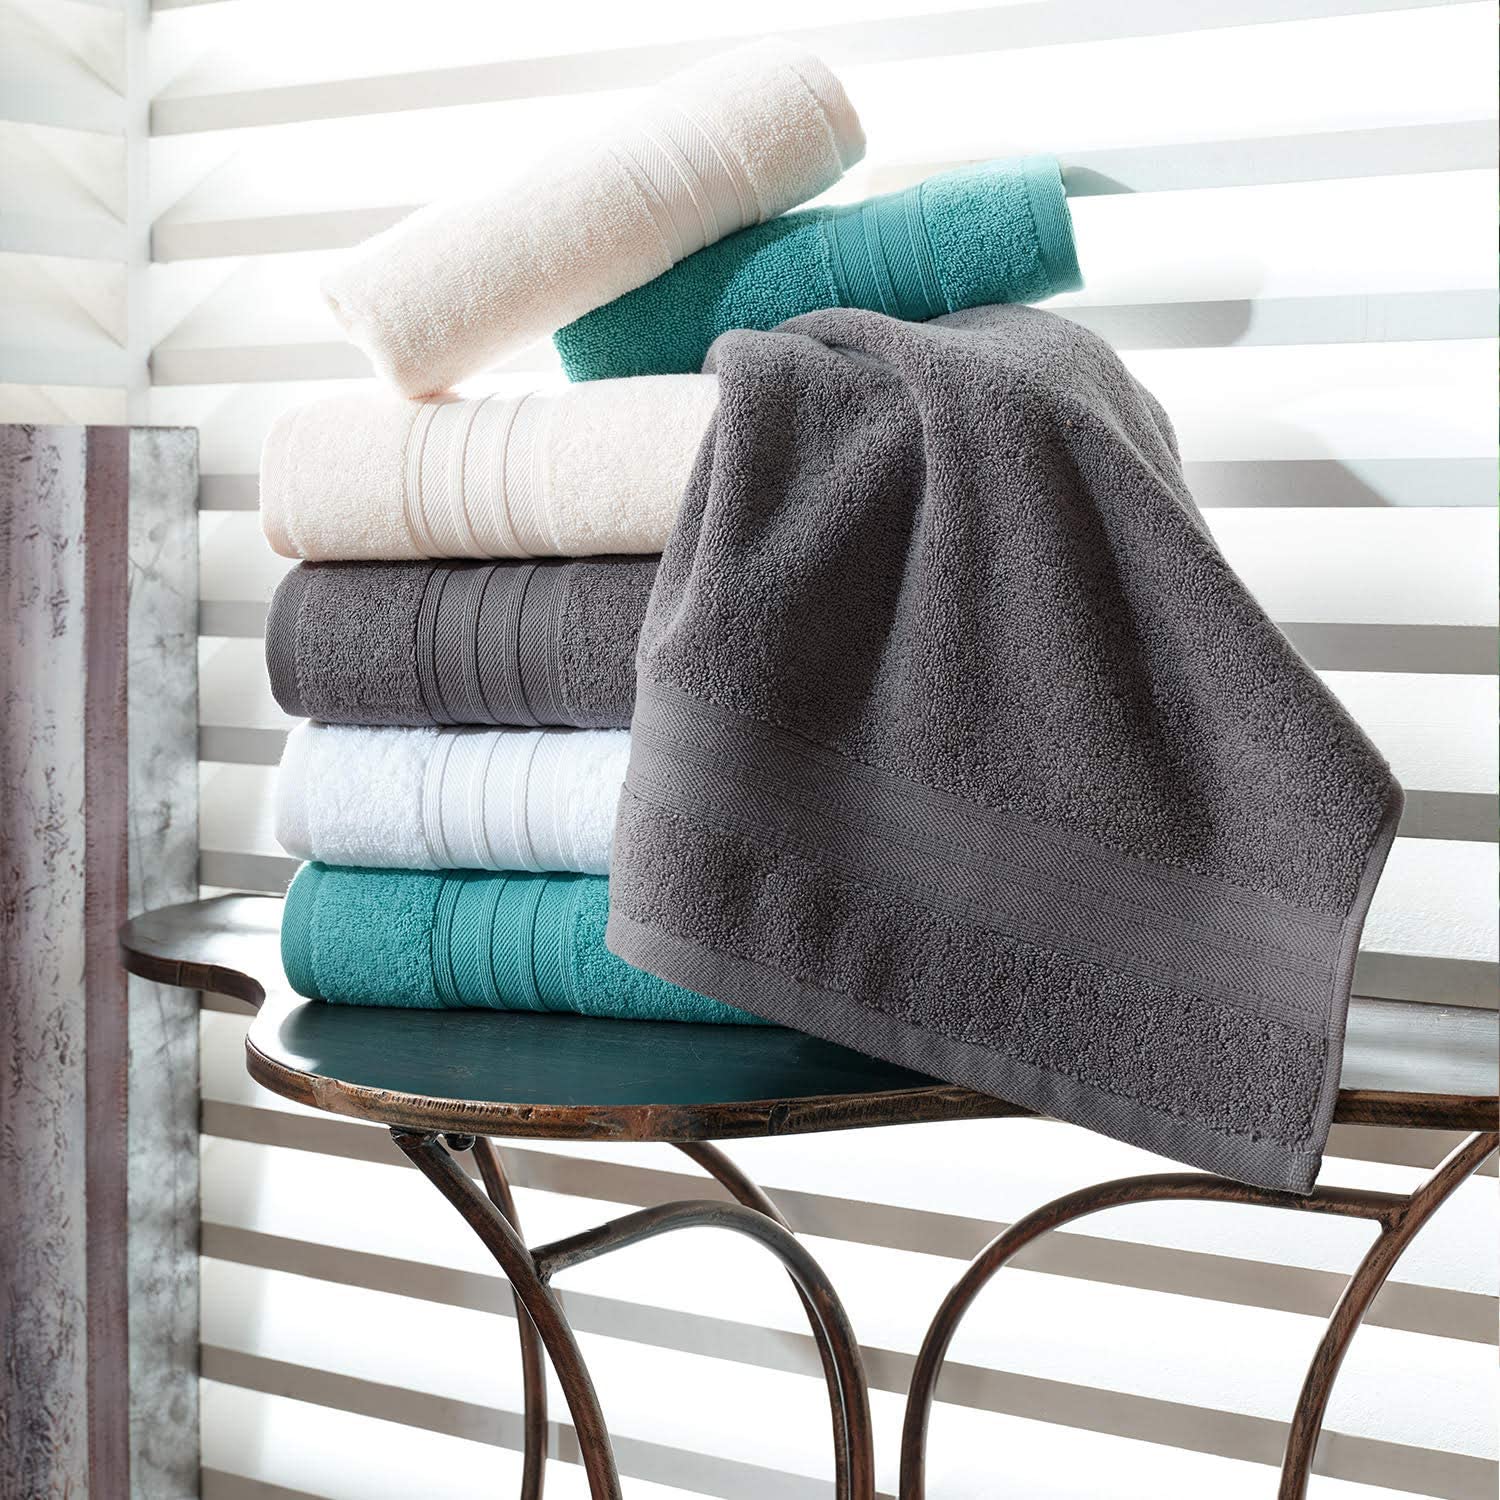 Hammam Linen 6-Piece Grey Bath Towels Set Original Turkish Cotton Soft